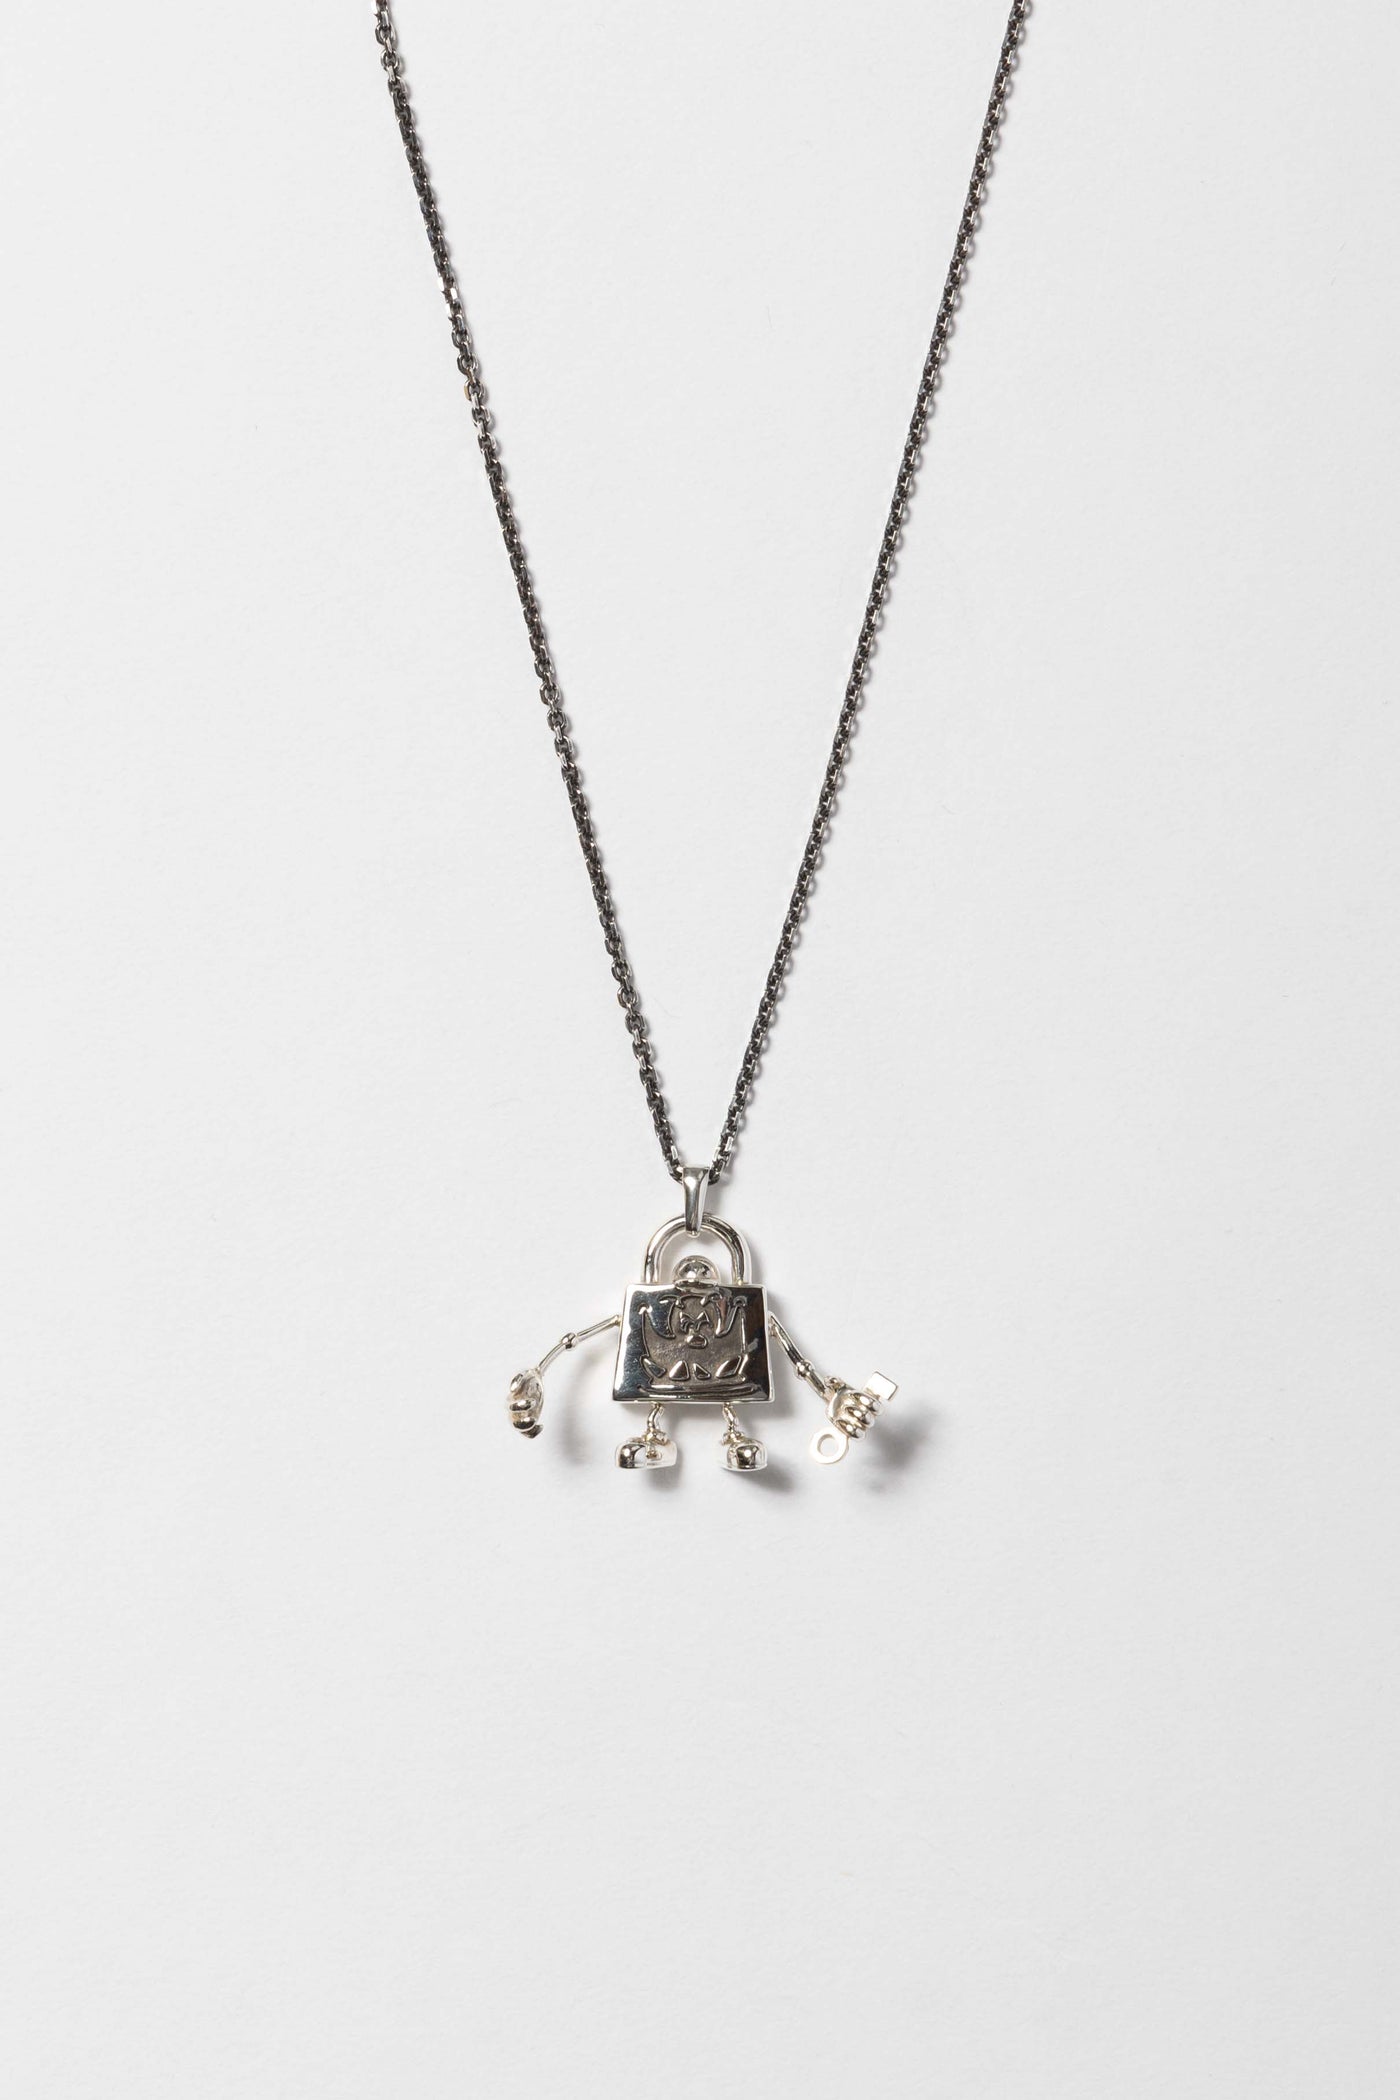 vaultroom DEVIL necklace - ネックレス